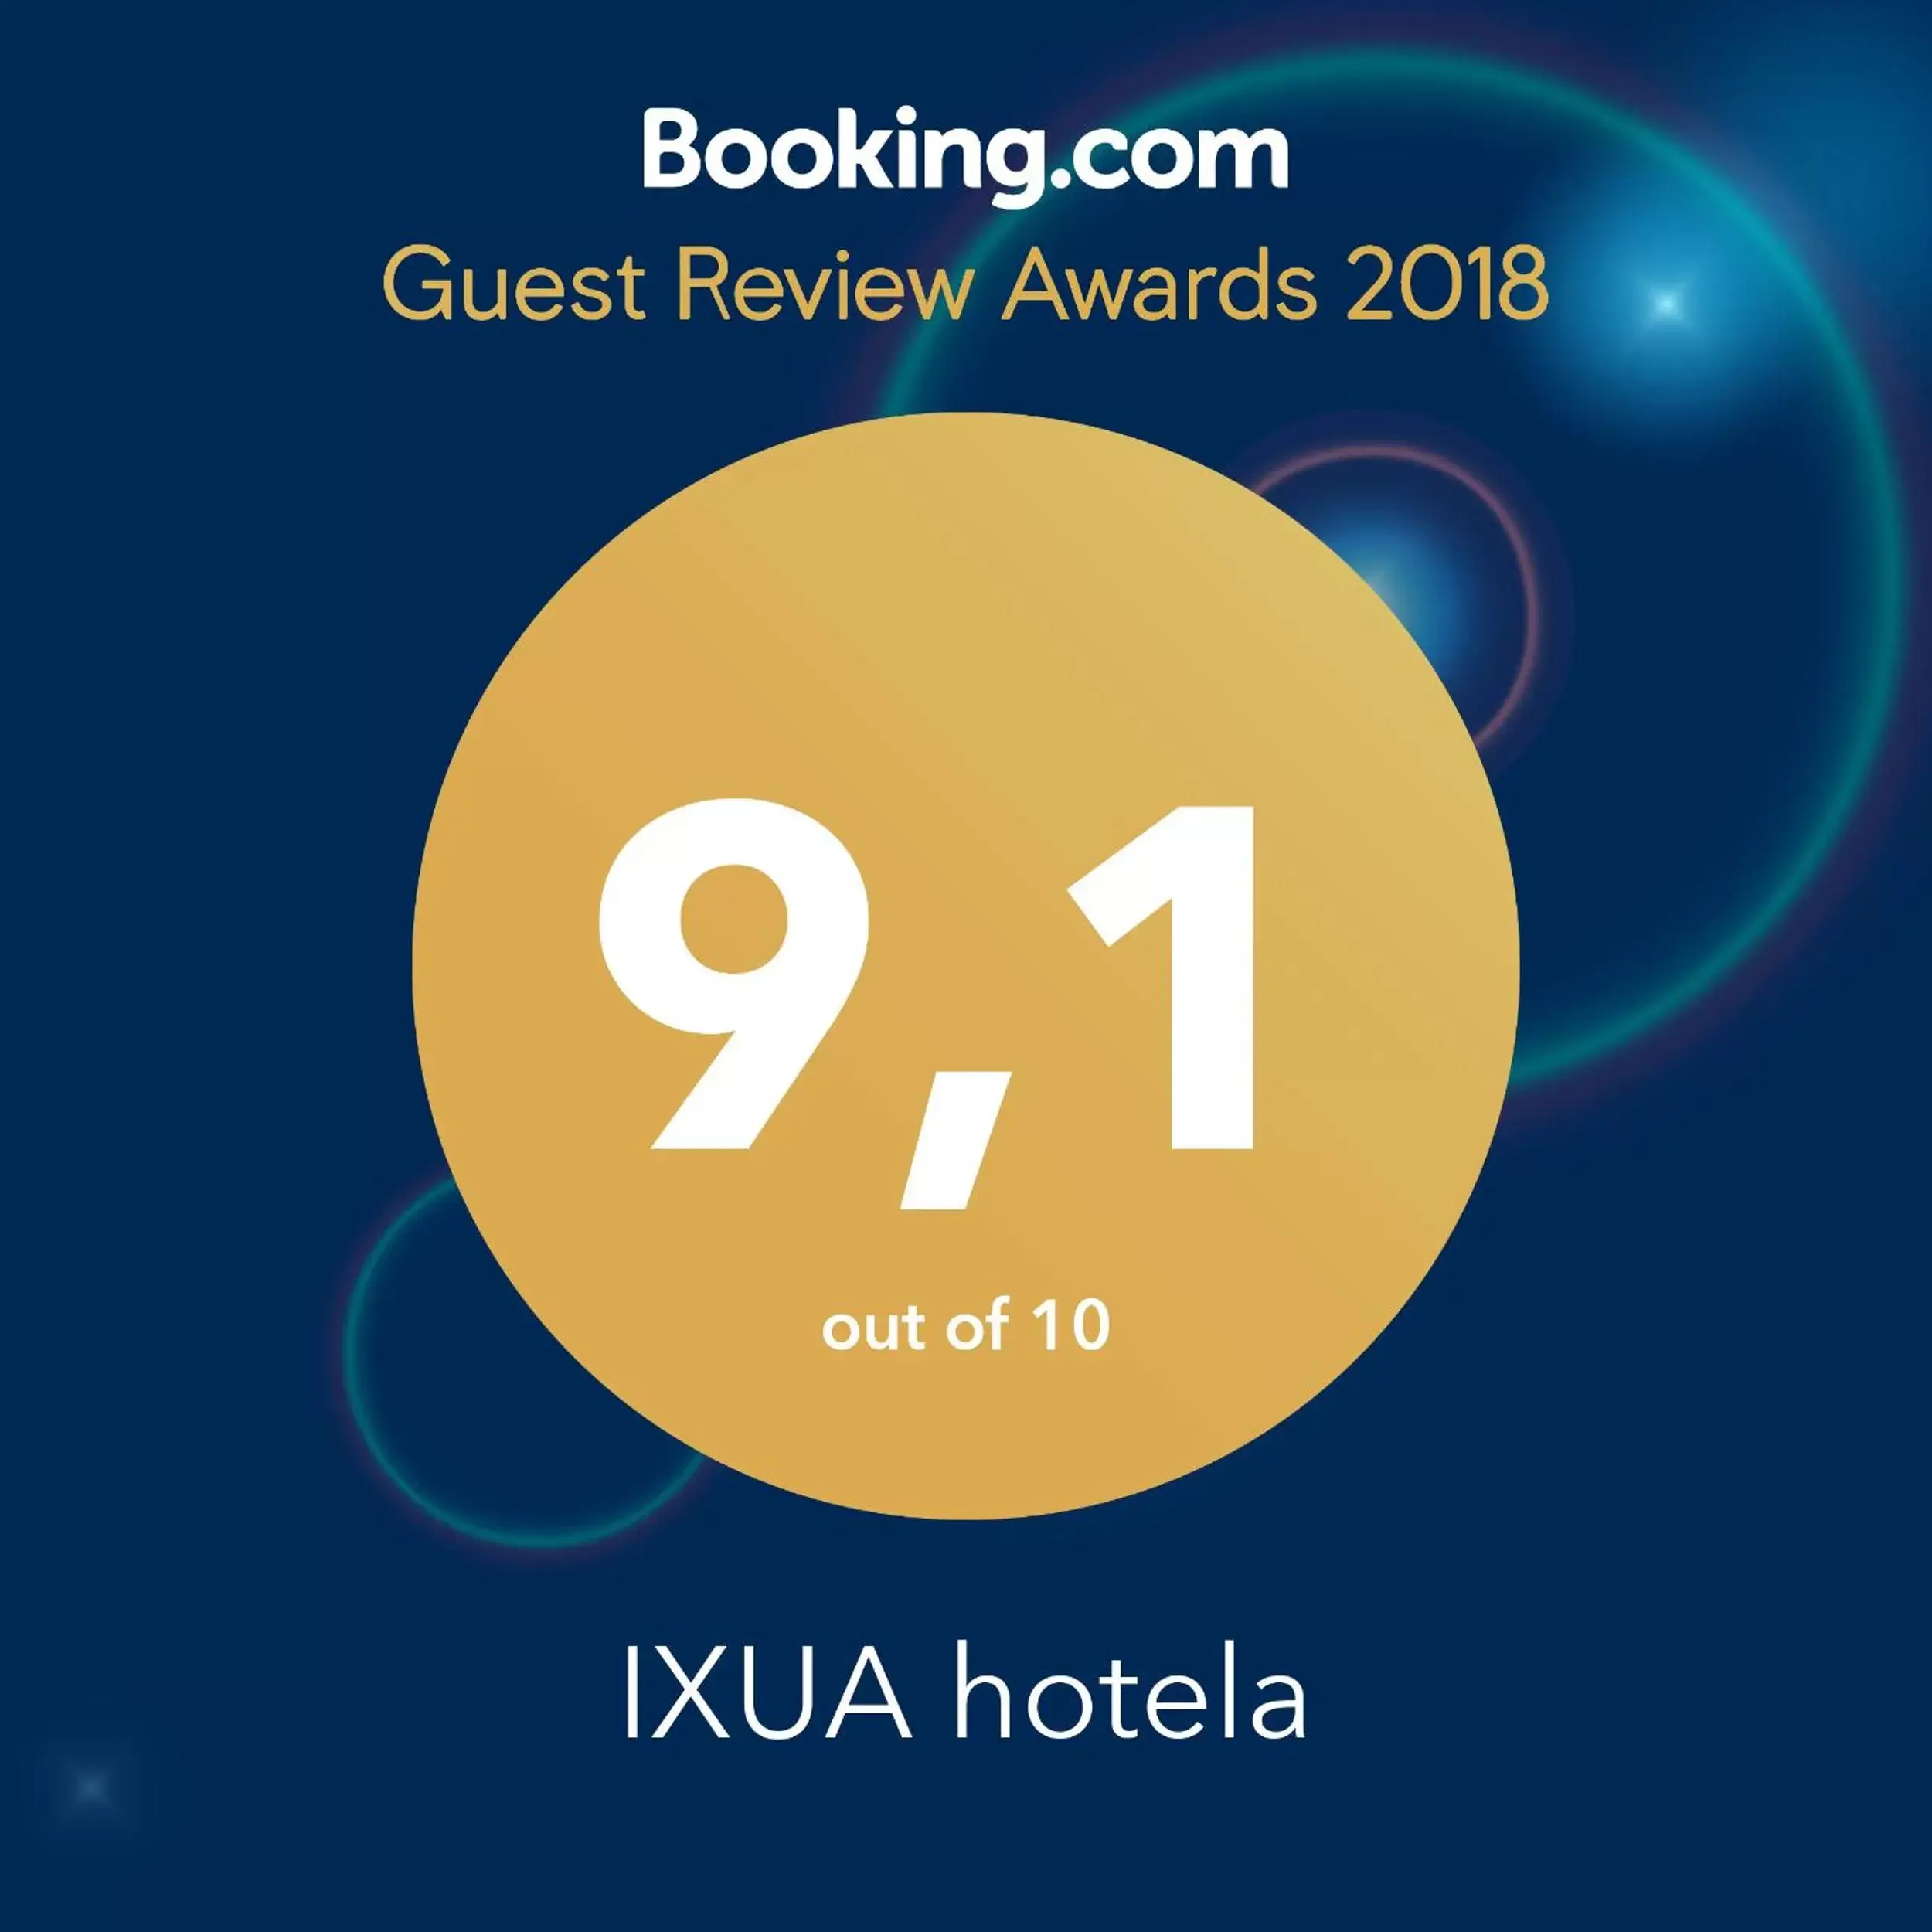 Certificate/Award in IXUA Hotela